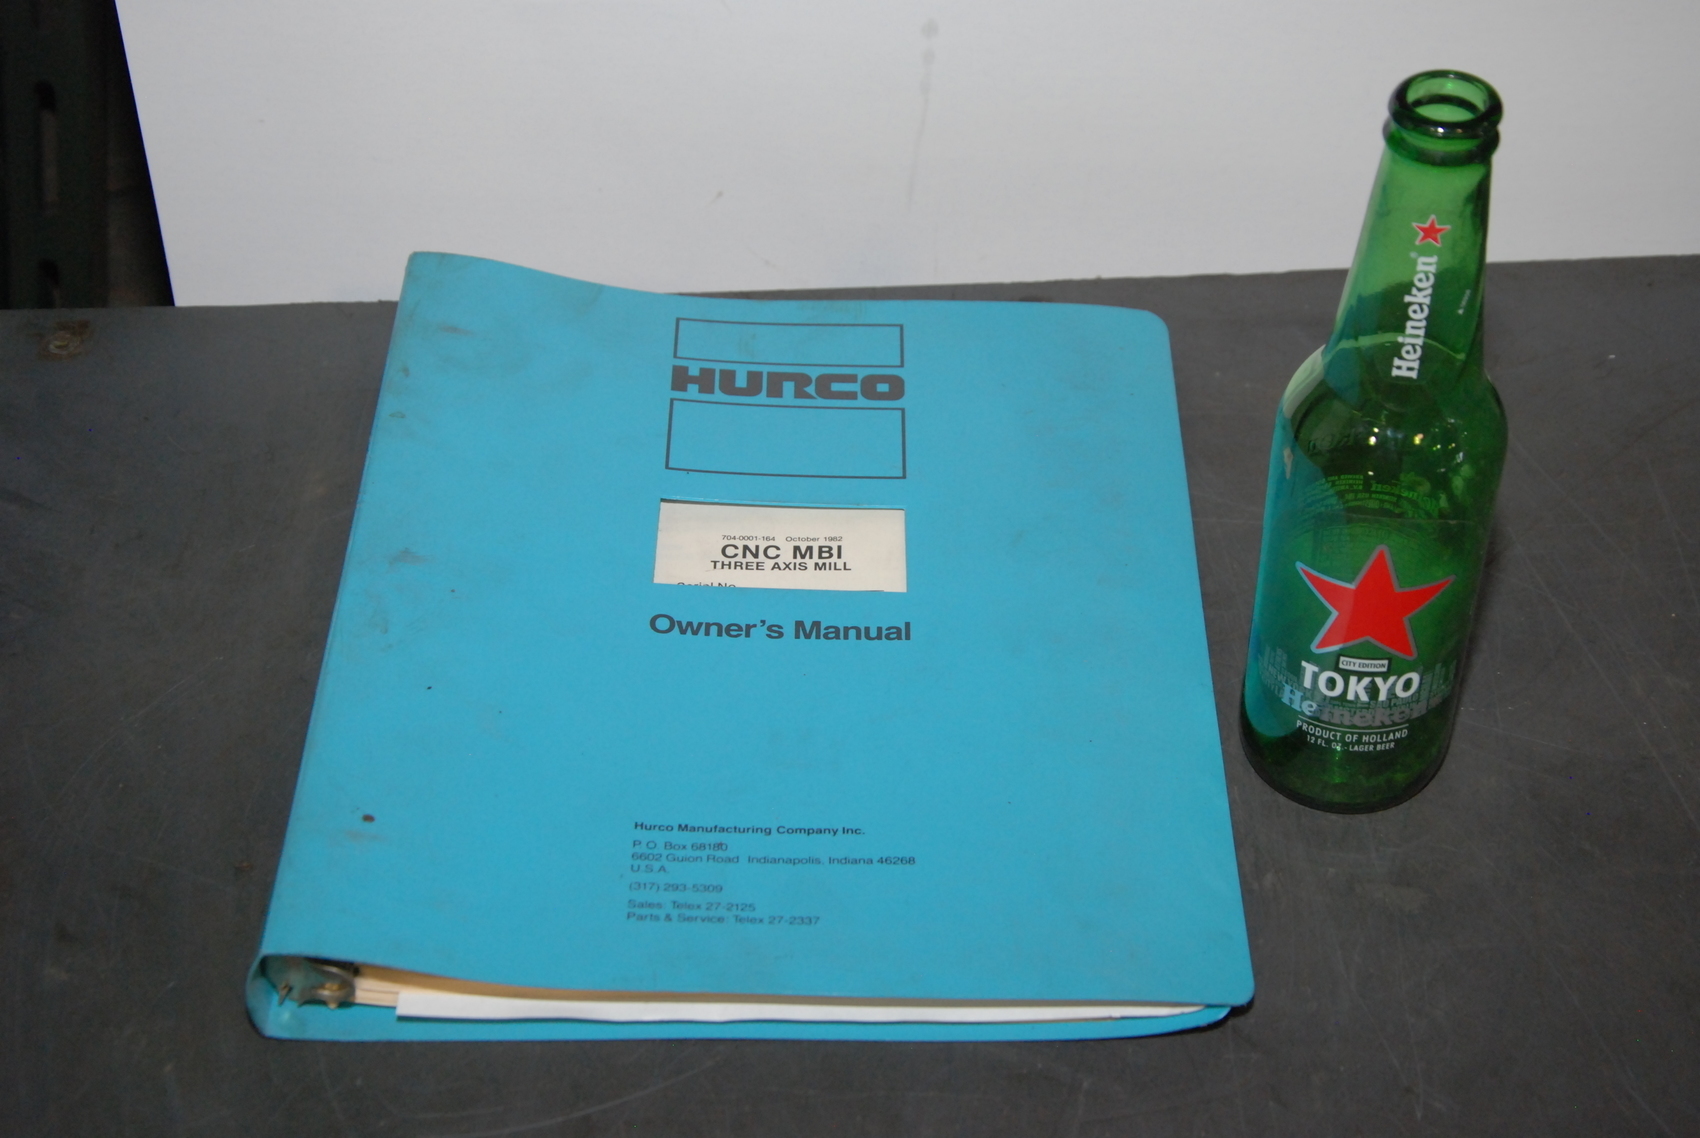 Hurco CNC MB1 Three Axis Mill Owner's Manual